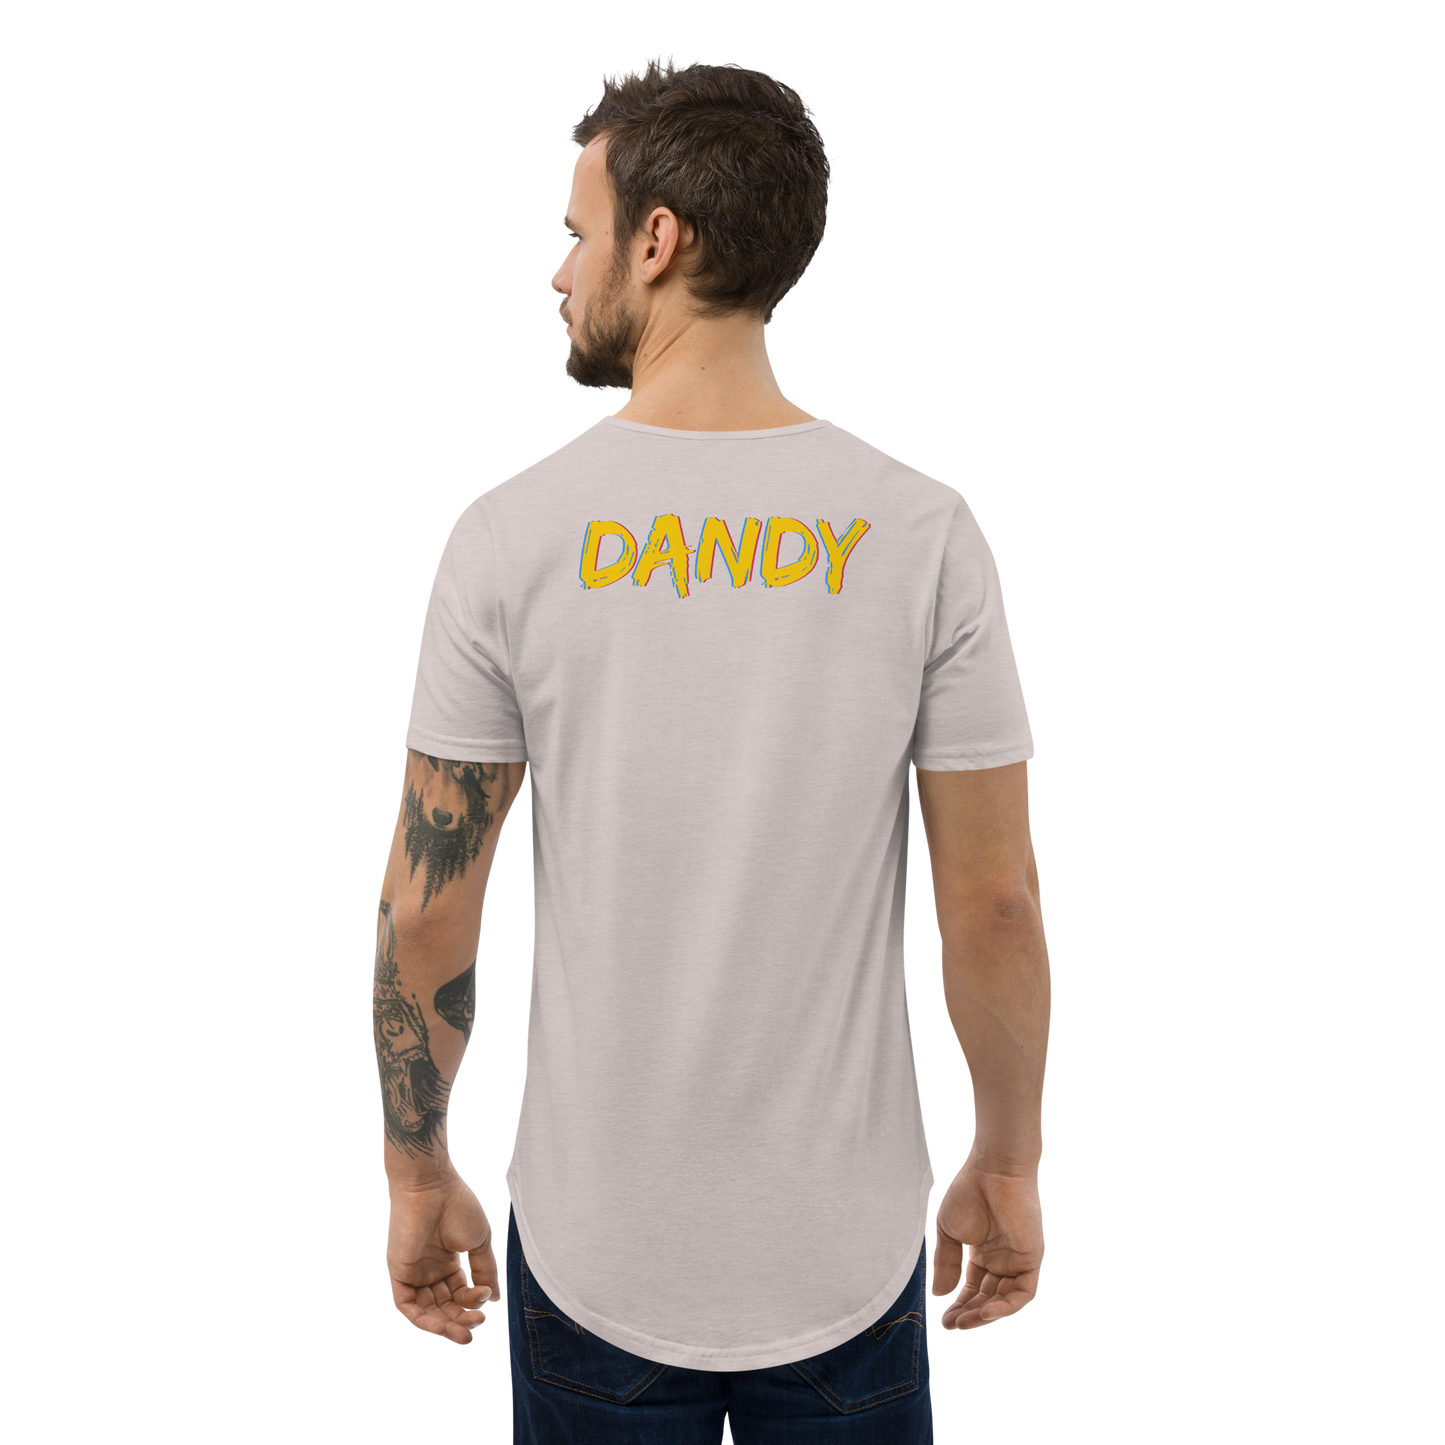 Dandy Men's Curved Hem T-Shirt